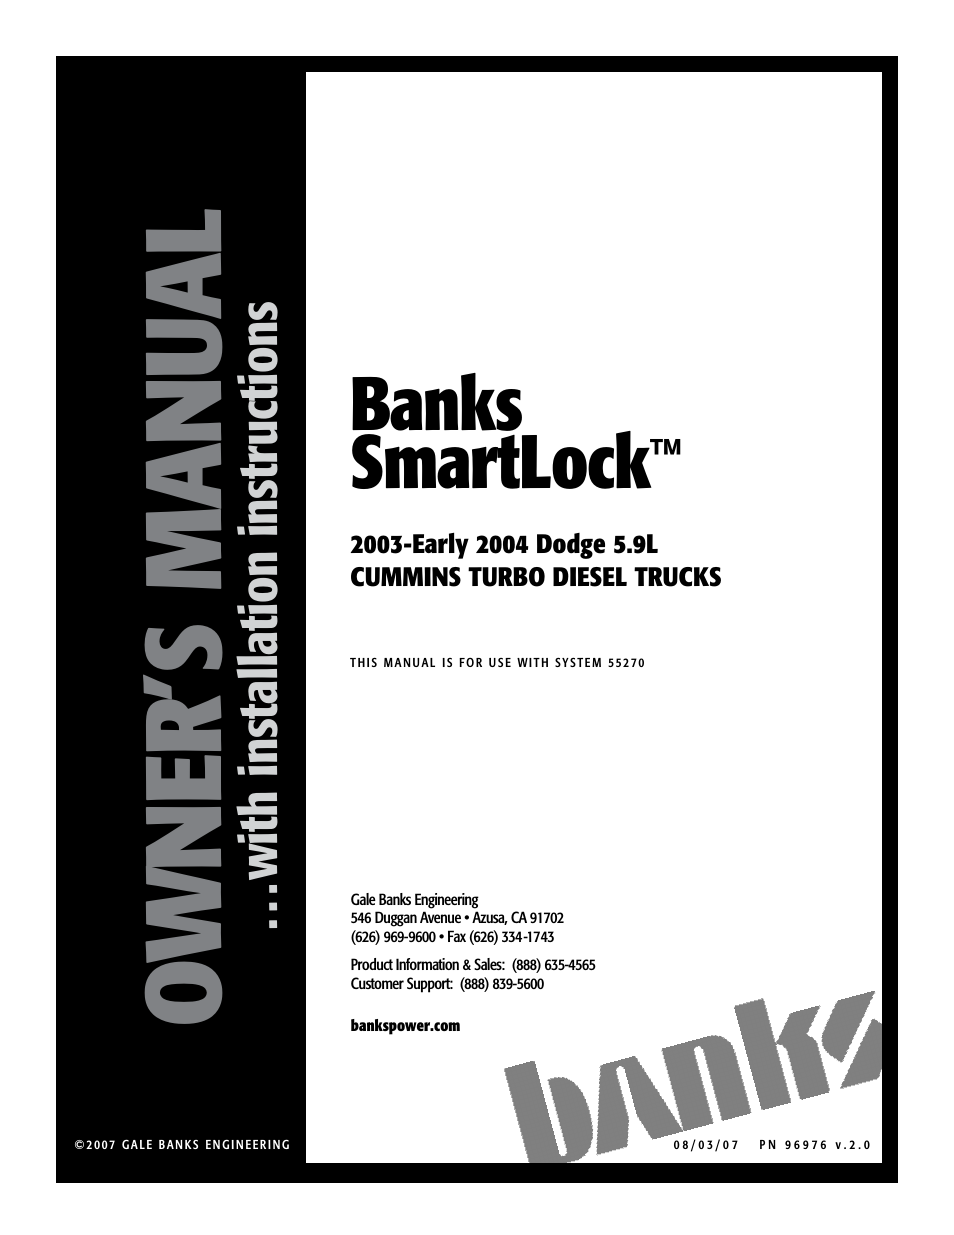 Dodge Trucks: (Diesel ’03 - 07 5.9L Cummins) Speed Control- Banks SmartLock '03-Early 04